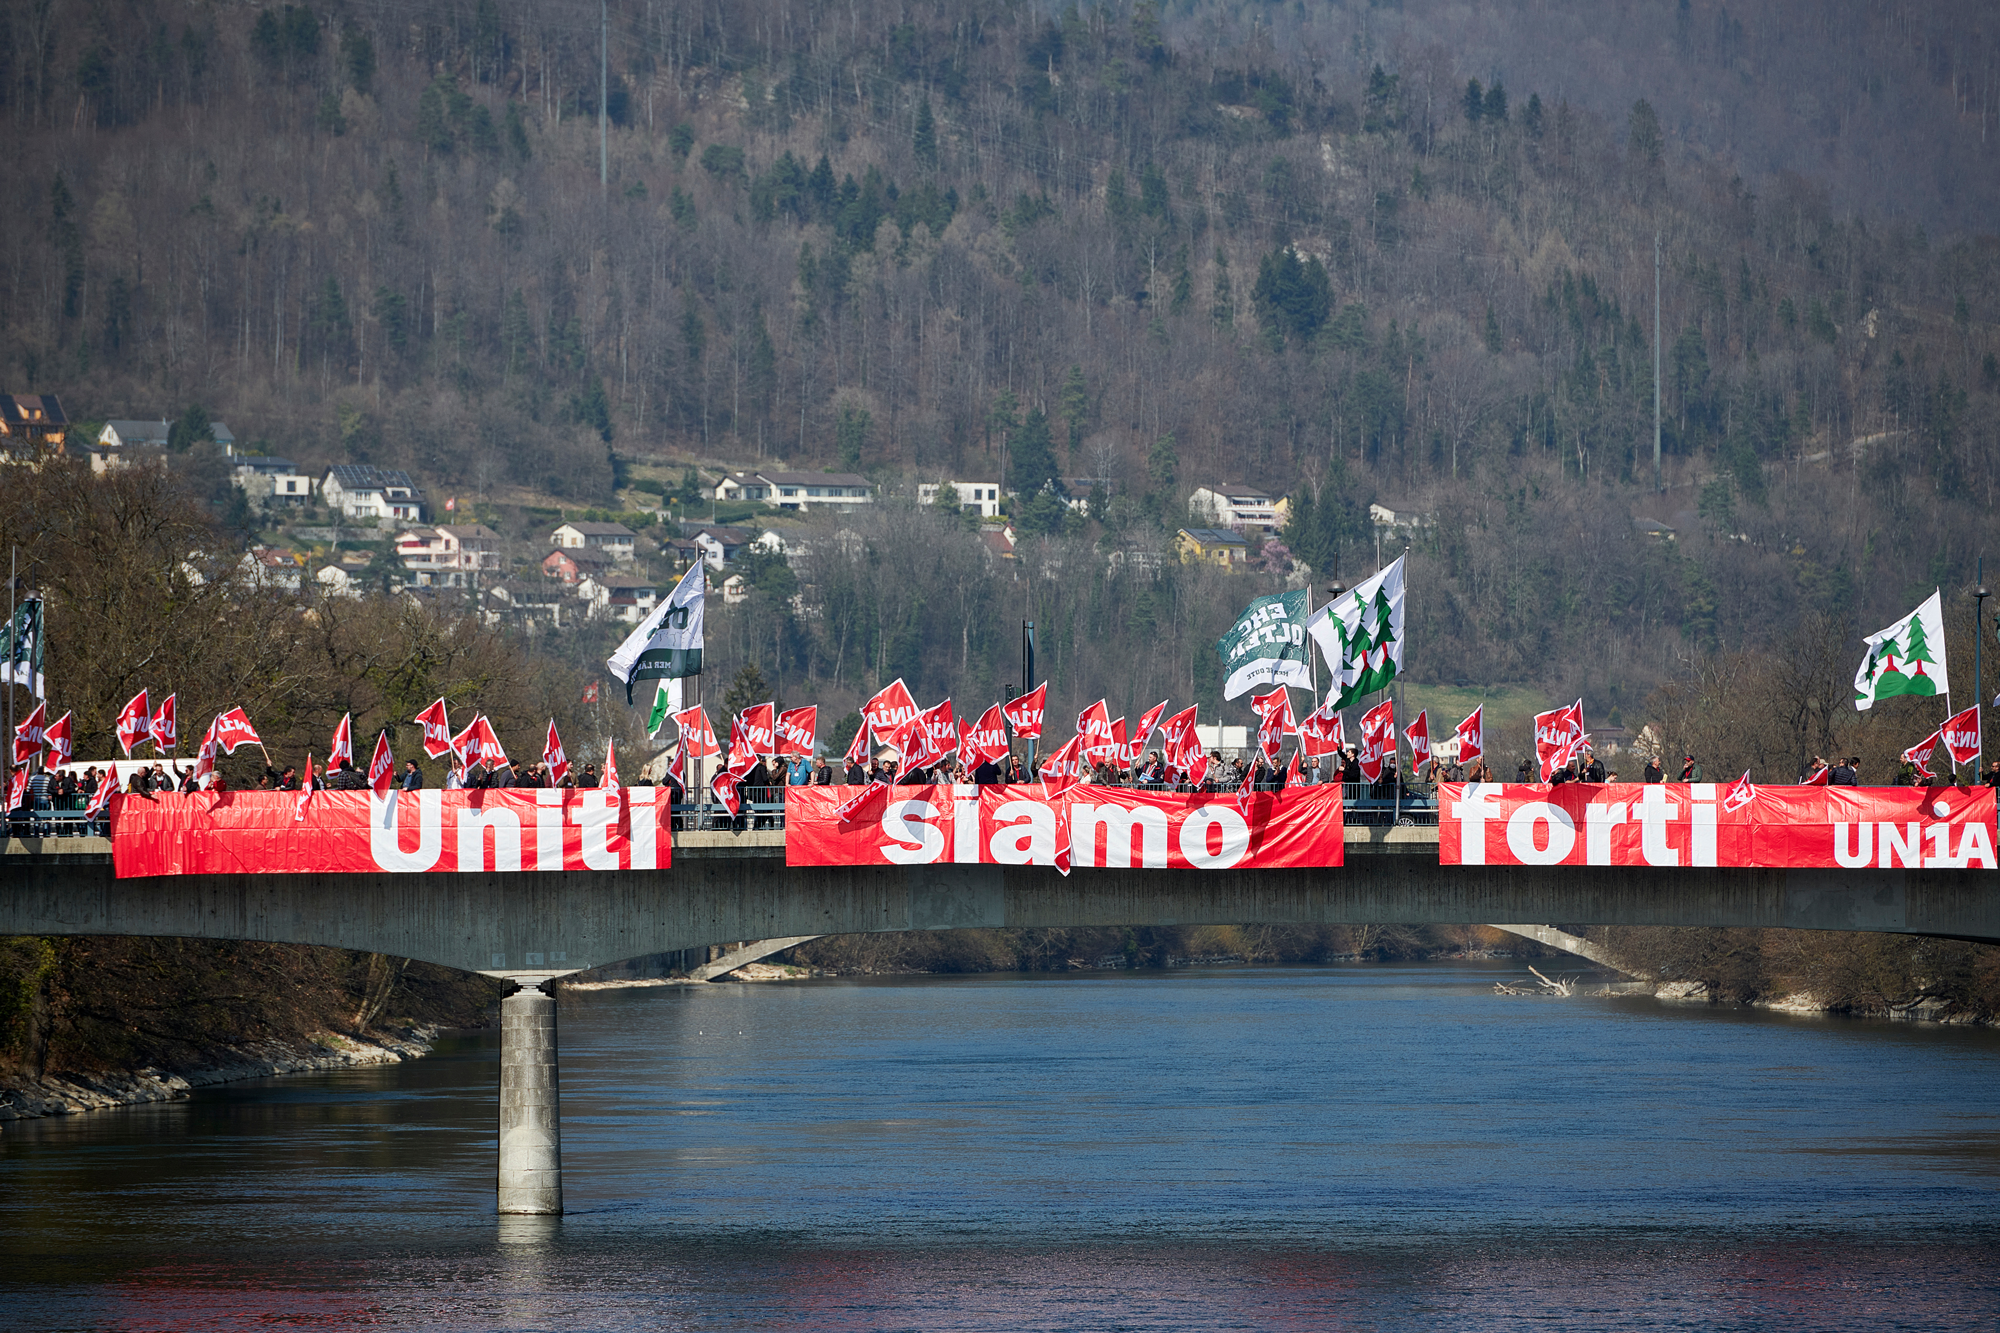 Transparent an Brücke über die Aare: Uniti siamo forti!